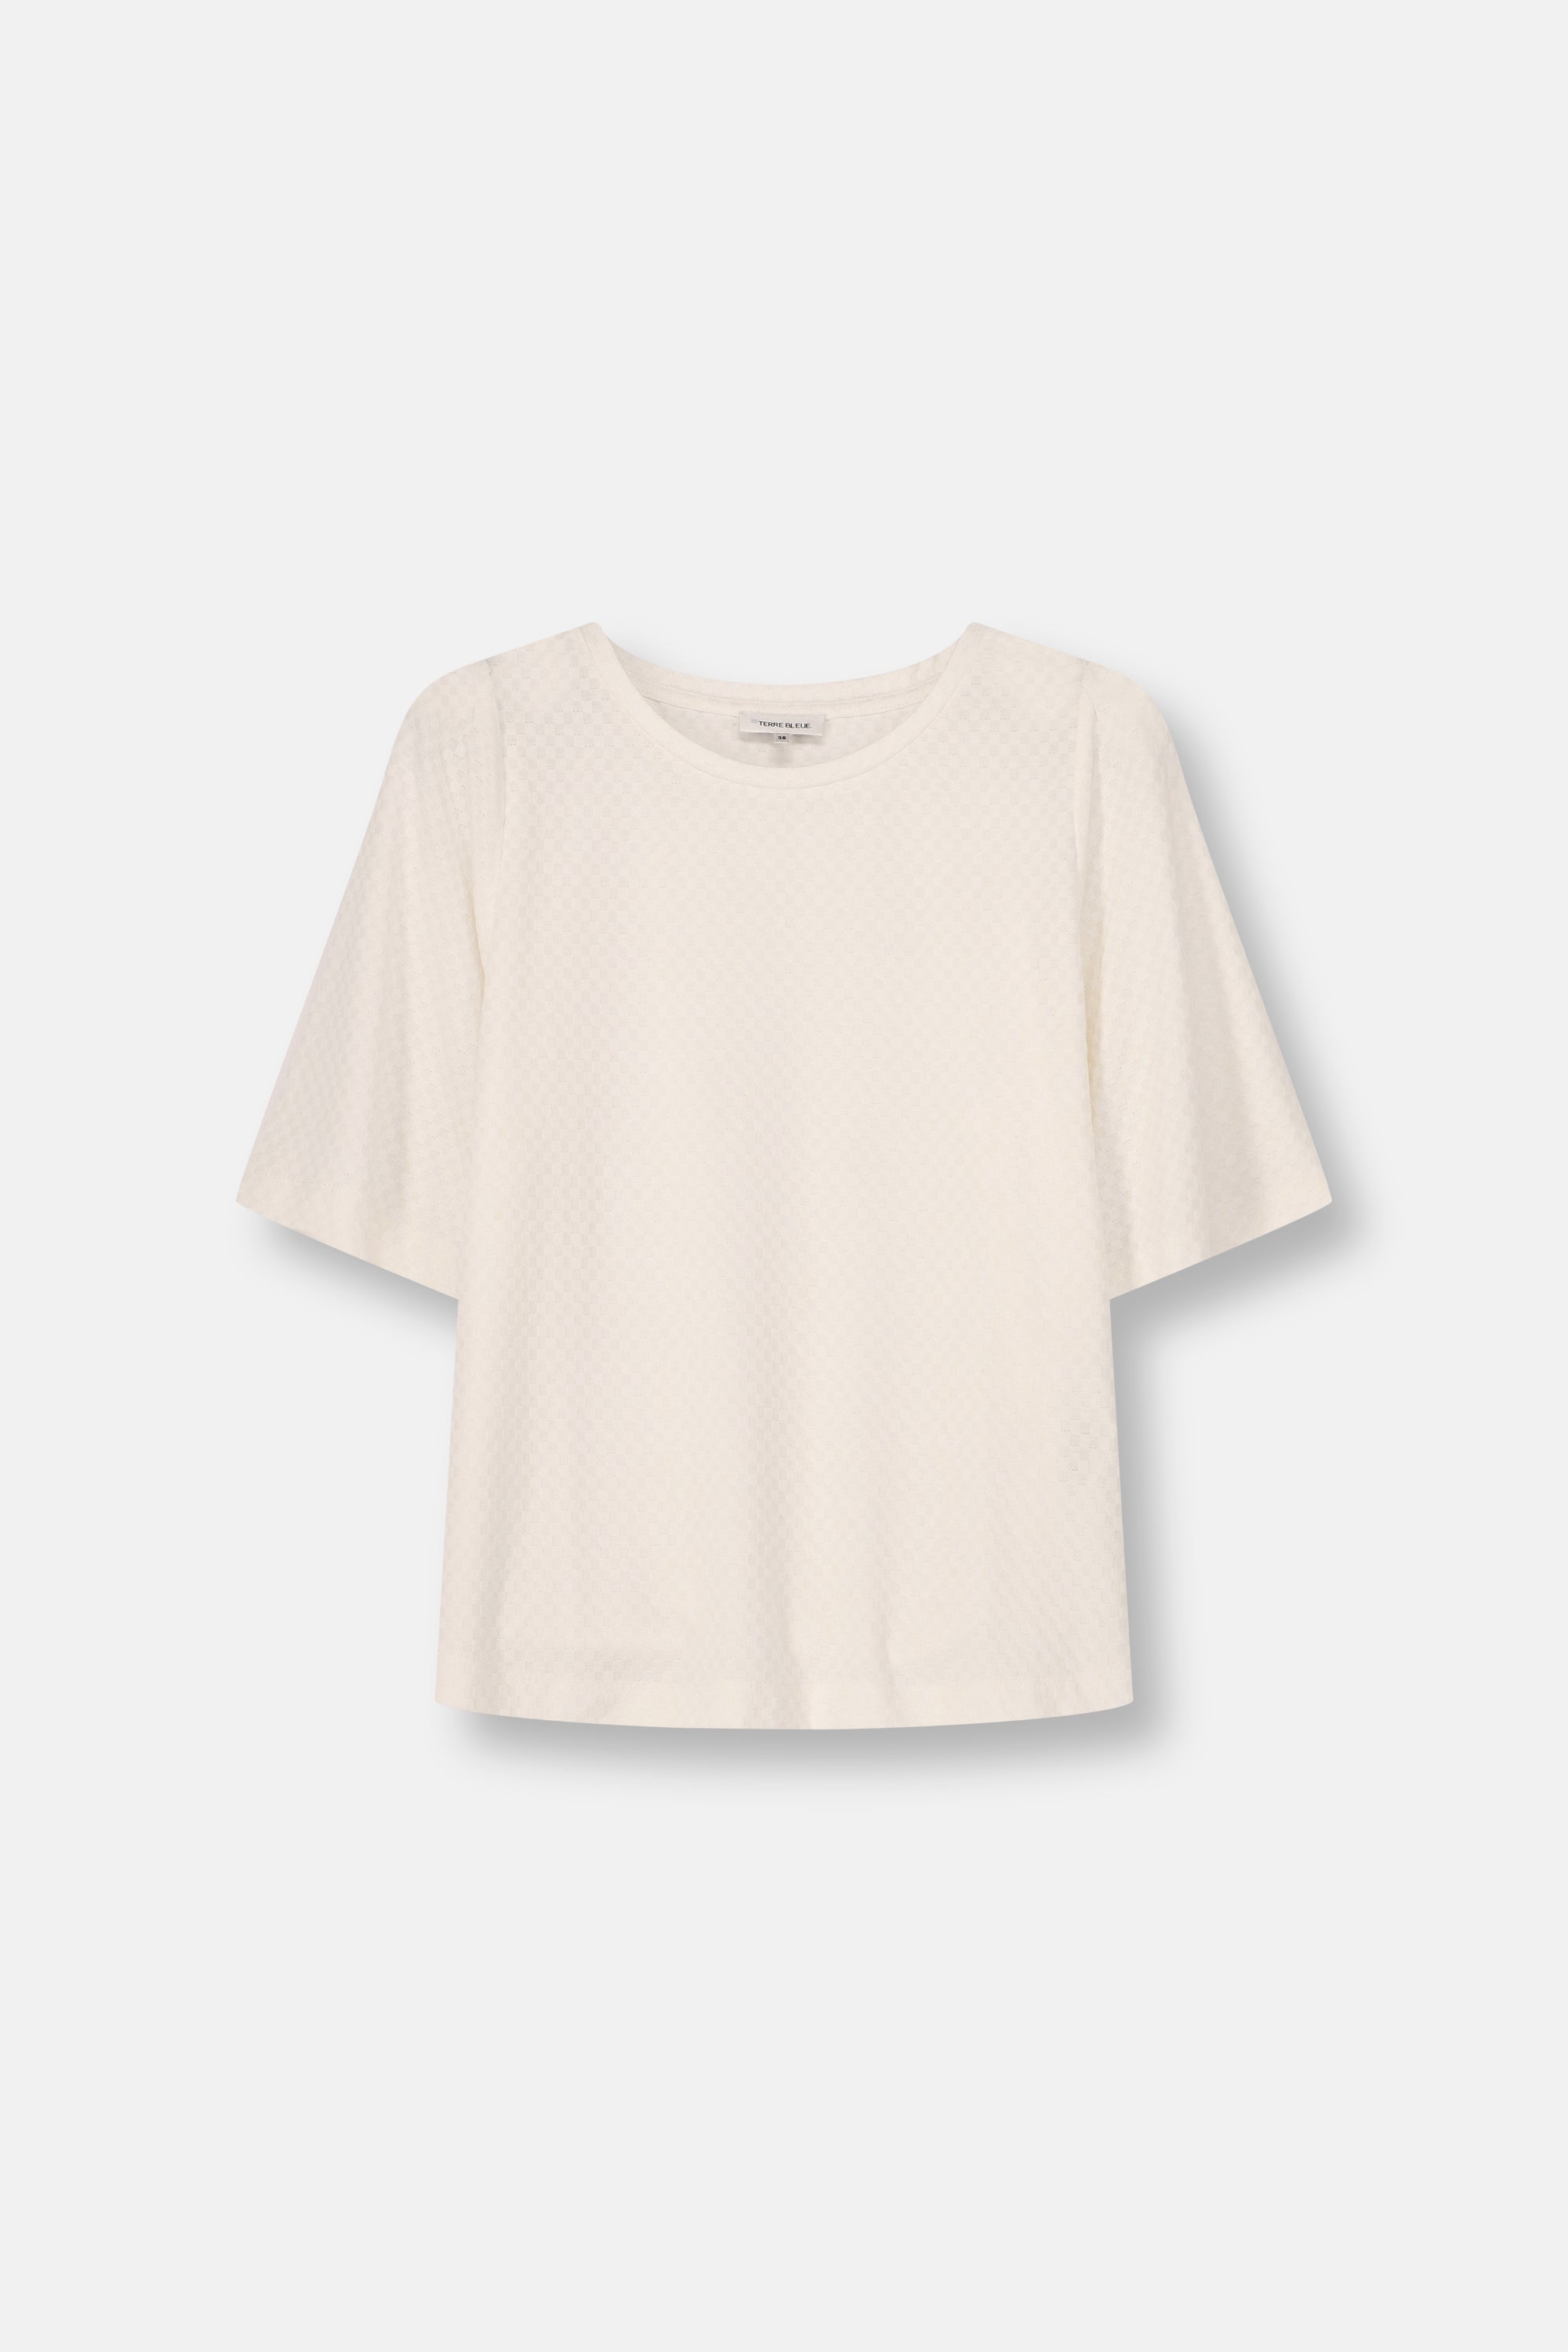 T-Shirt Blanc Terre Bleue ( Brit/000 )